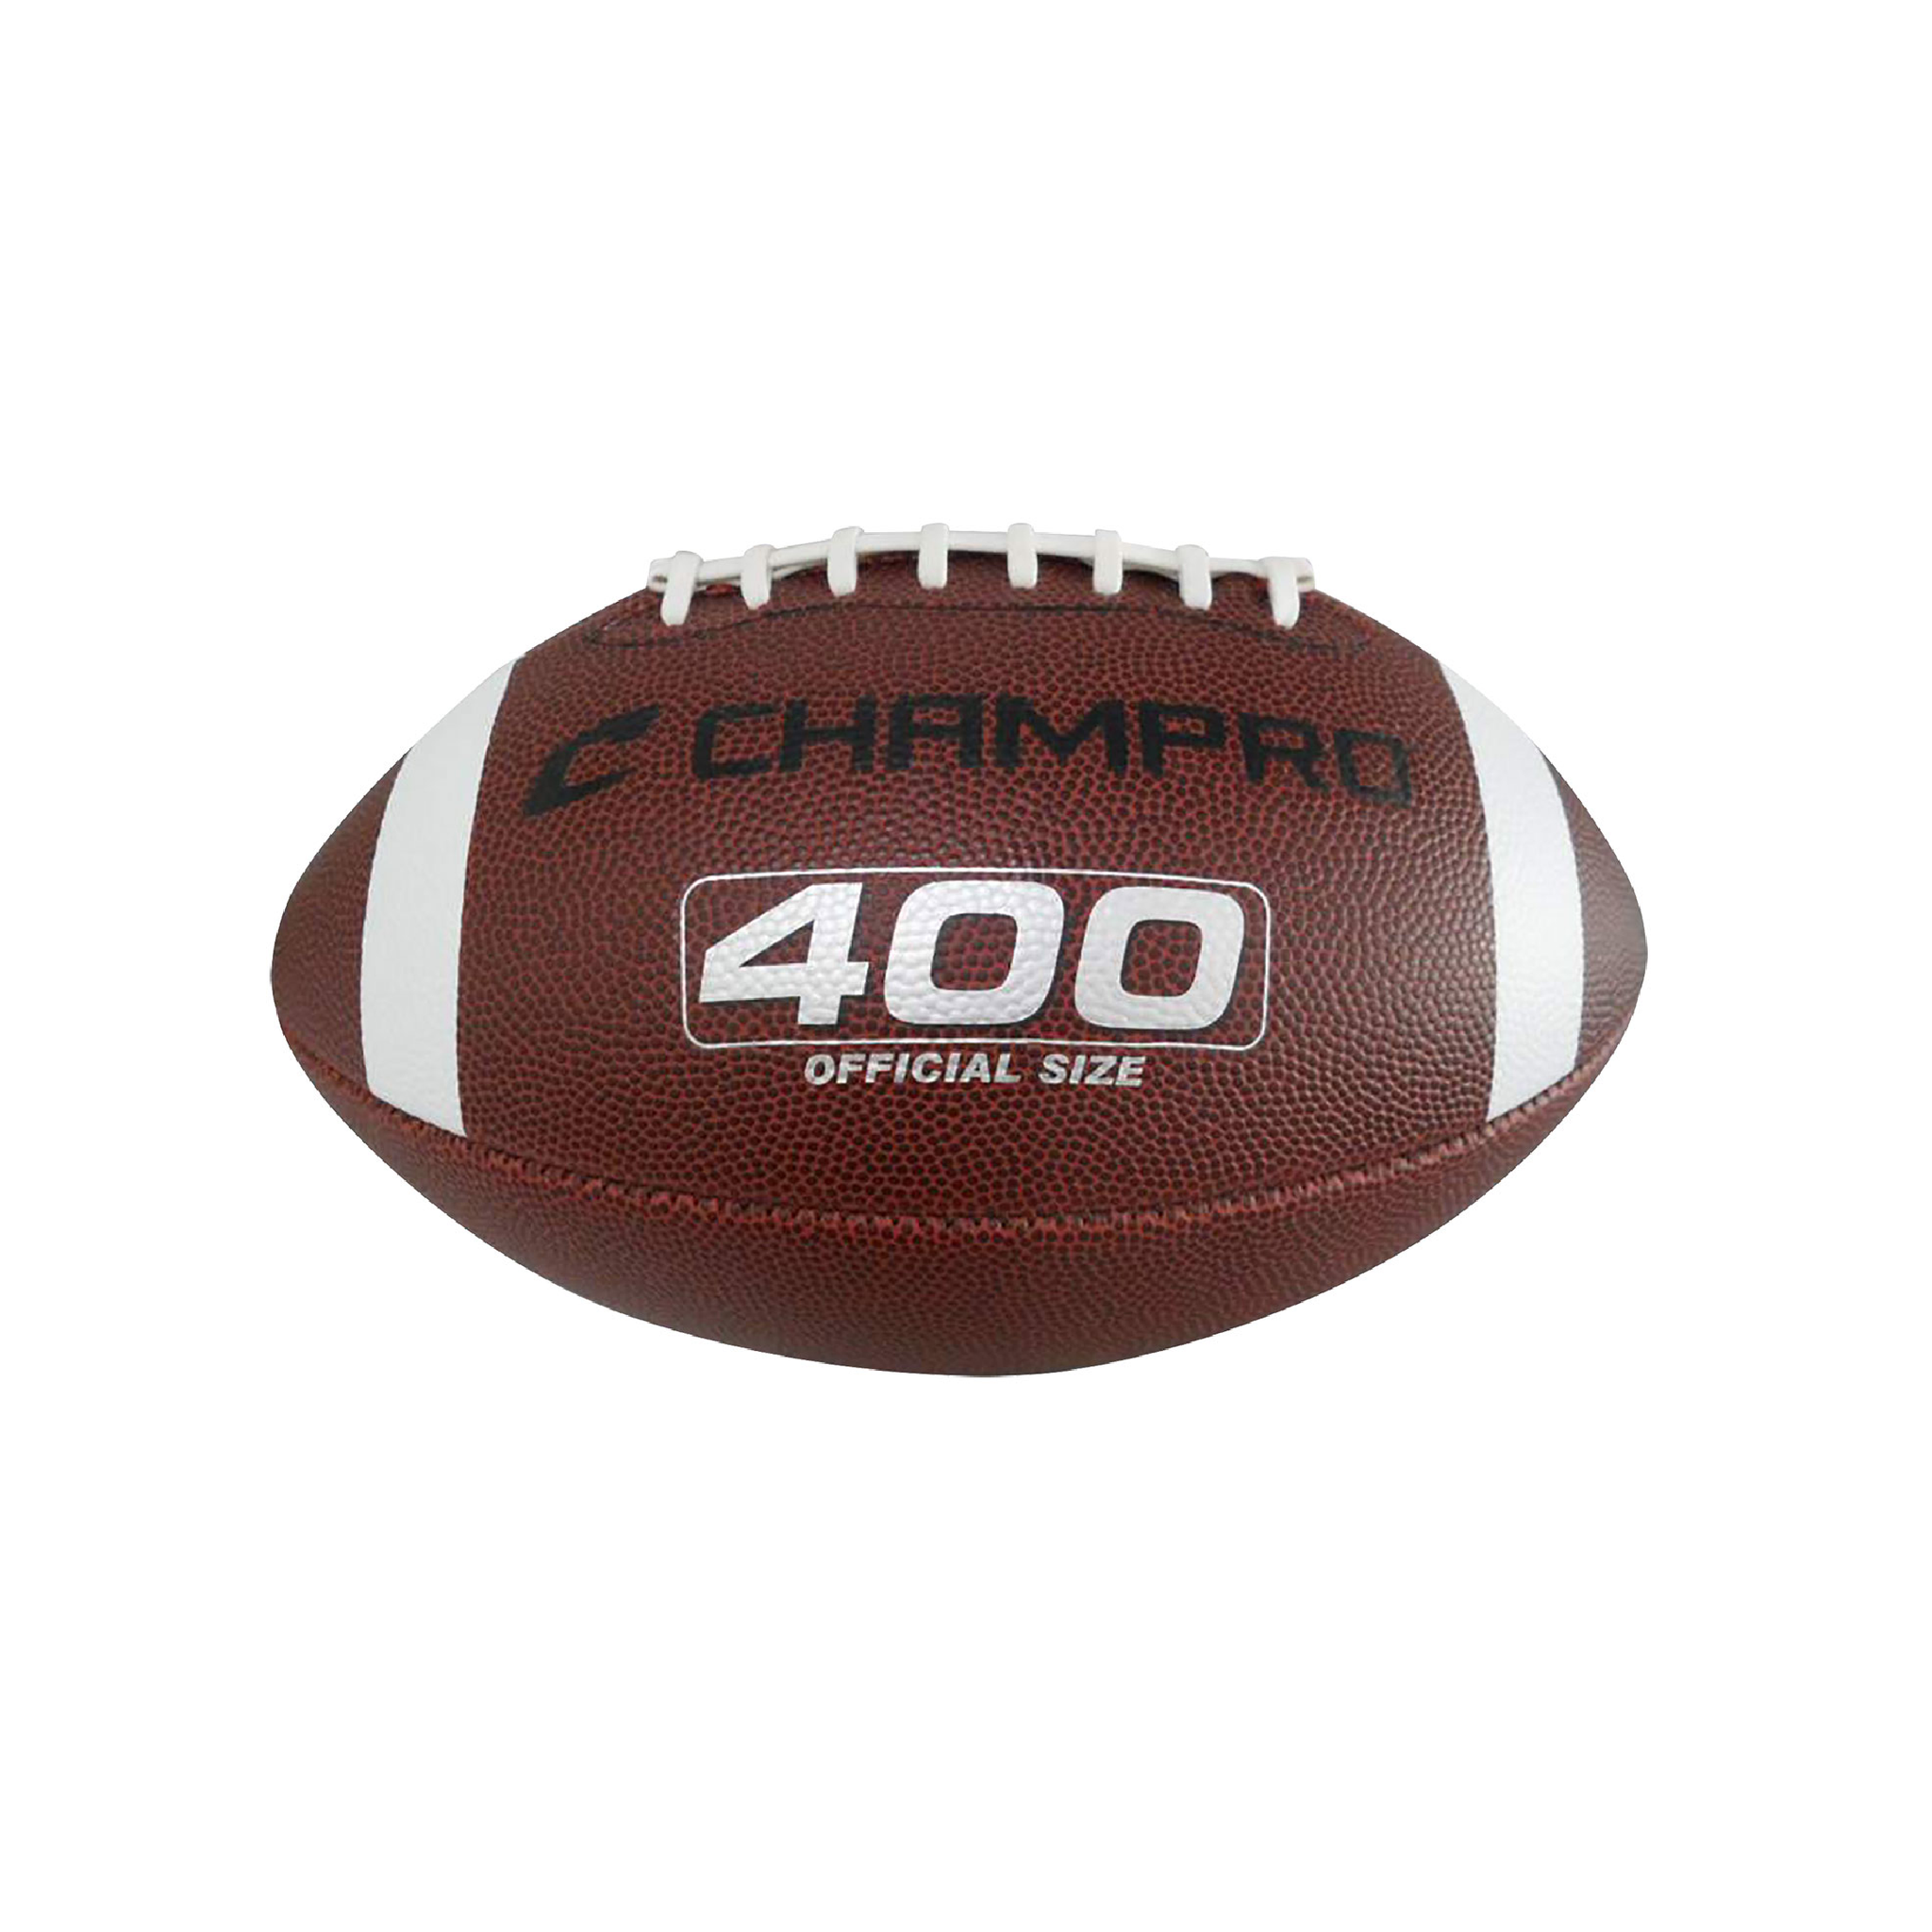 Champro "400" Composite Football